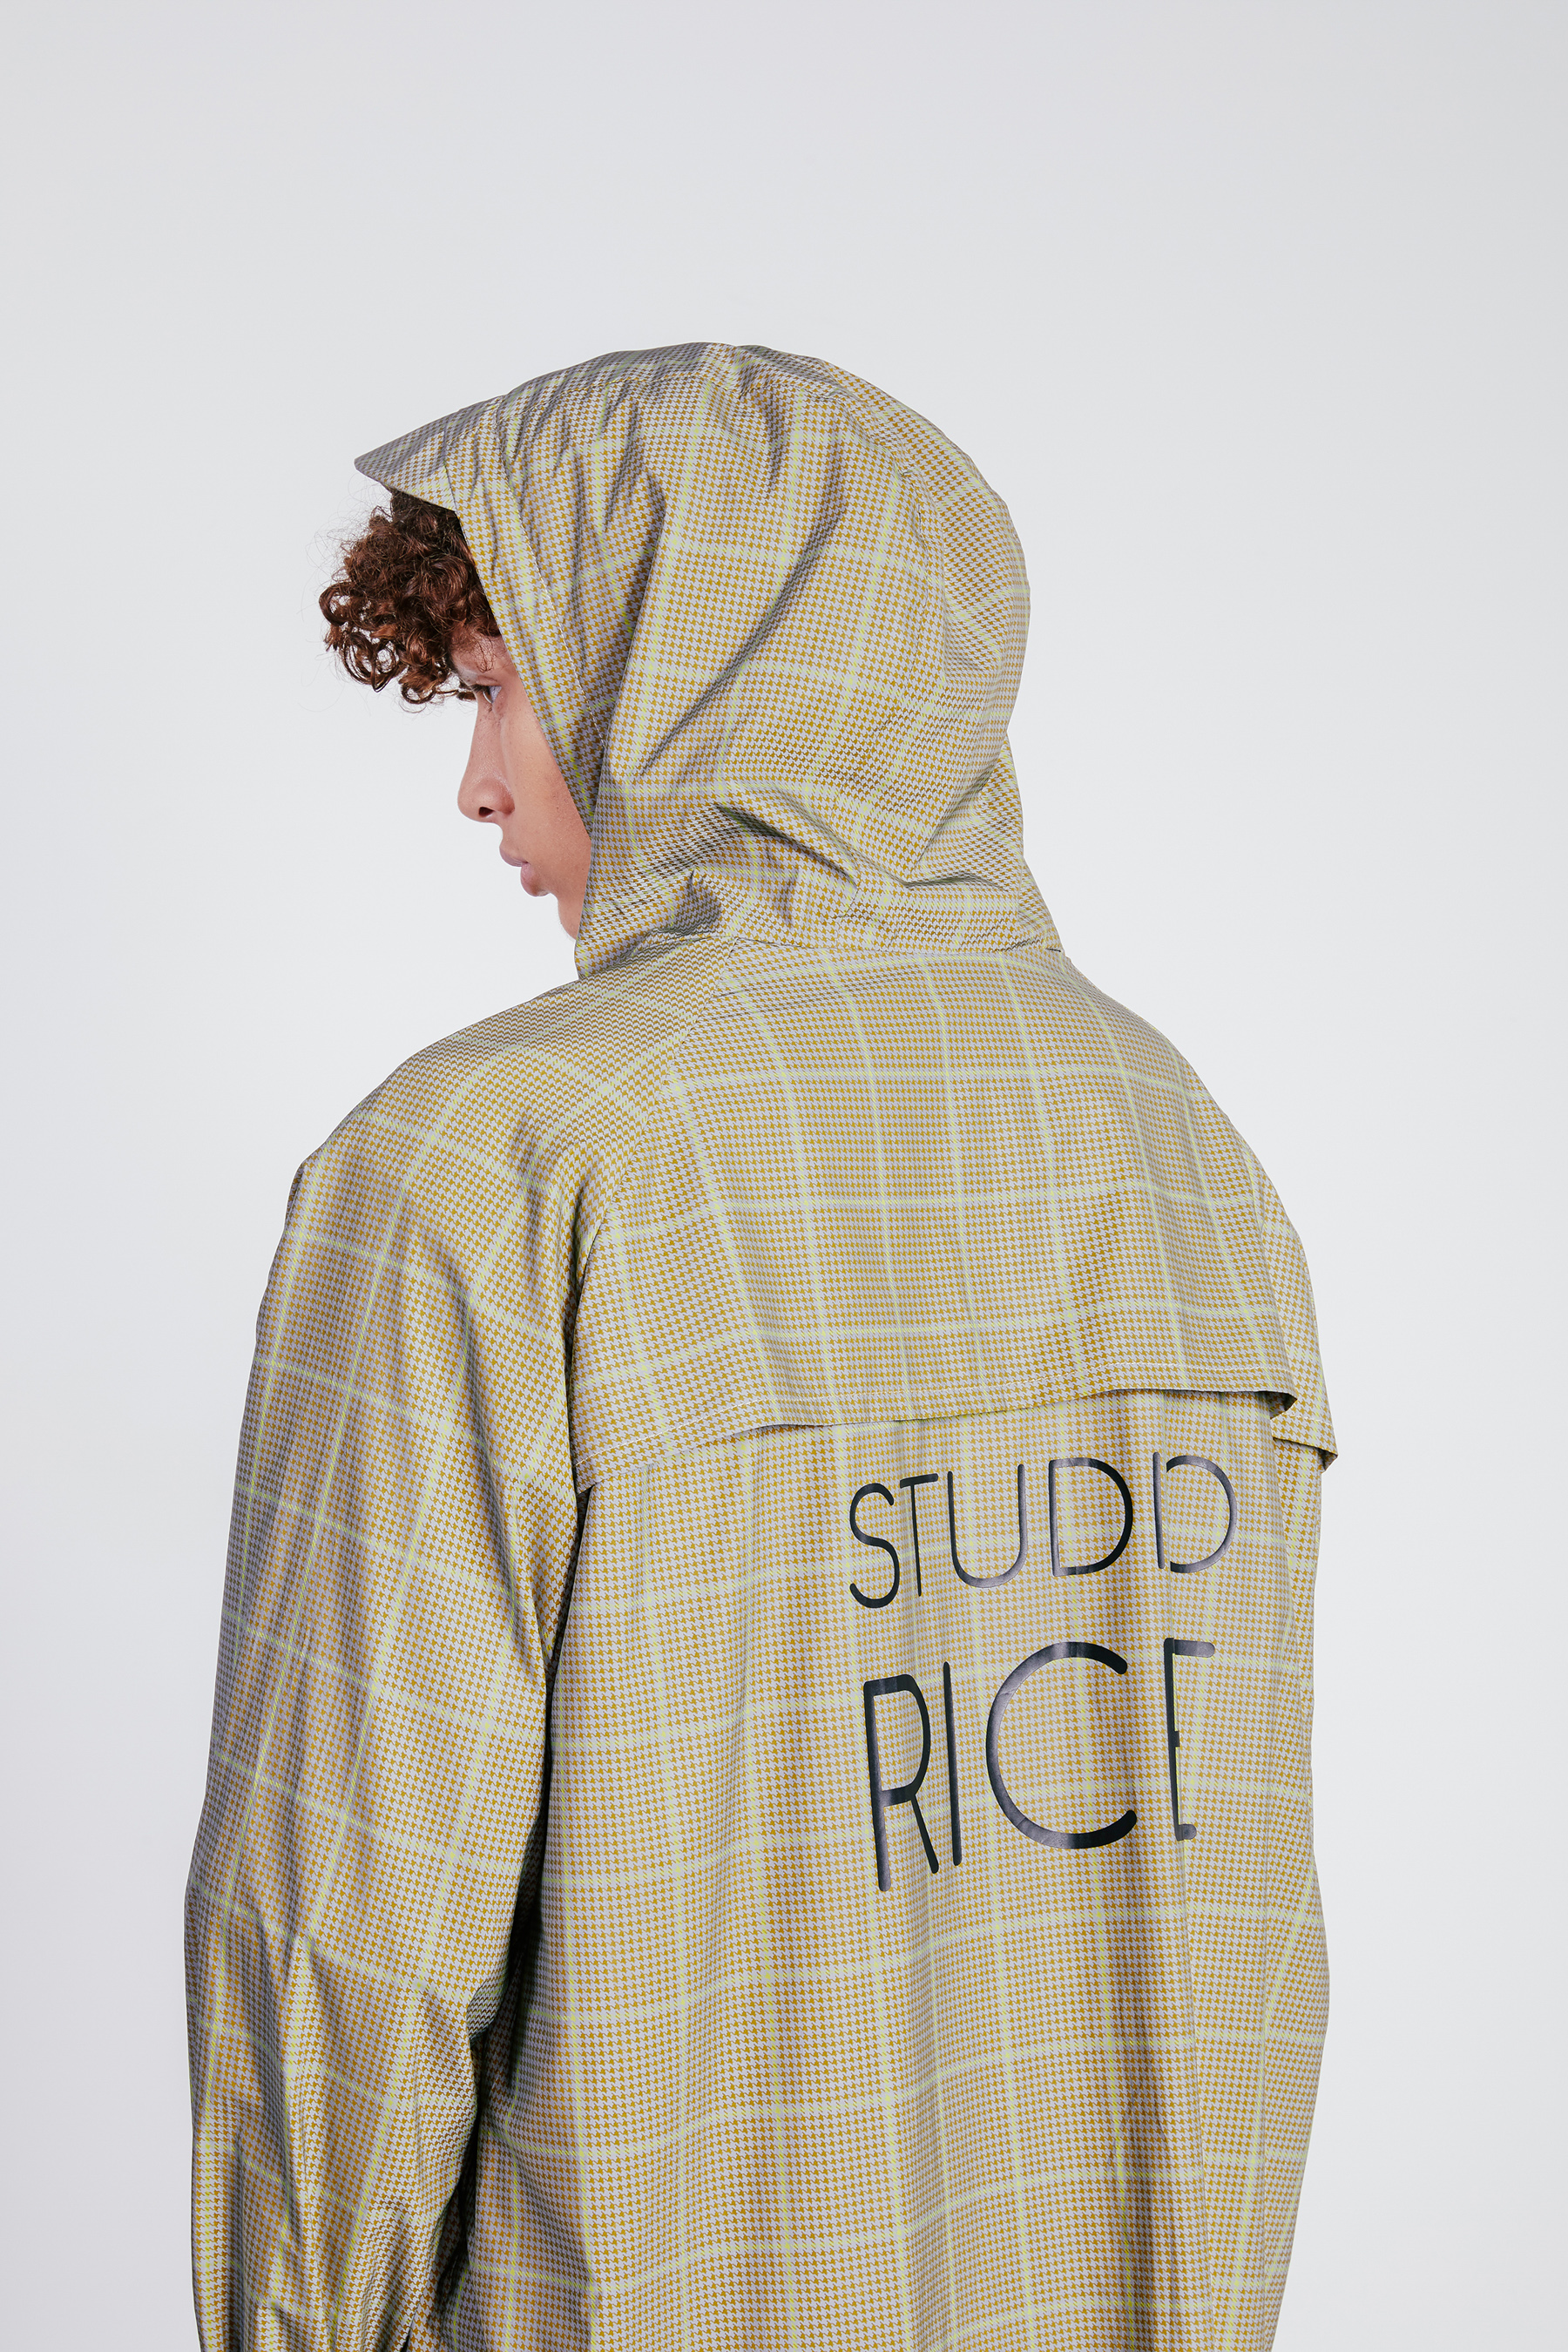 Studio Rice Spring 2021 Fashion Show 